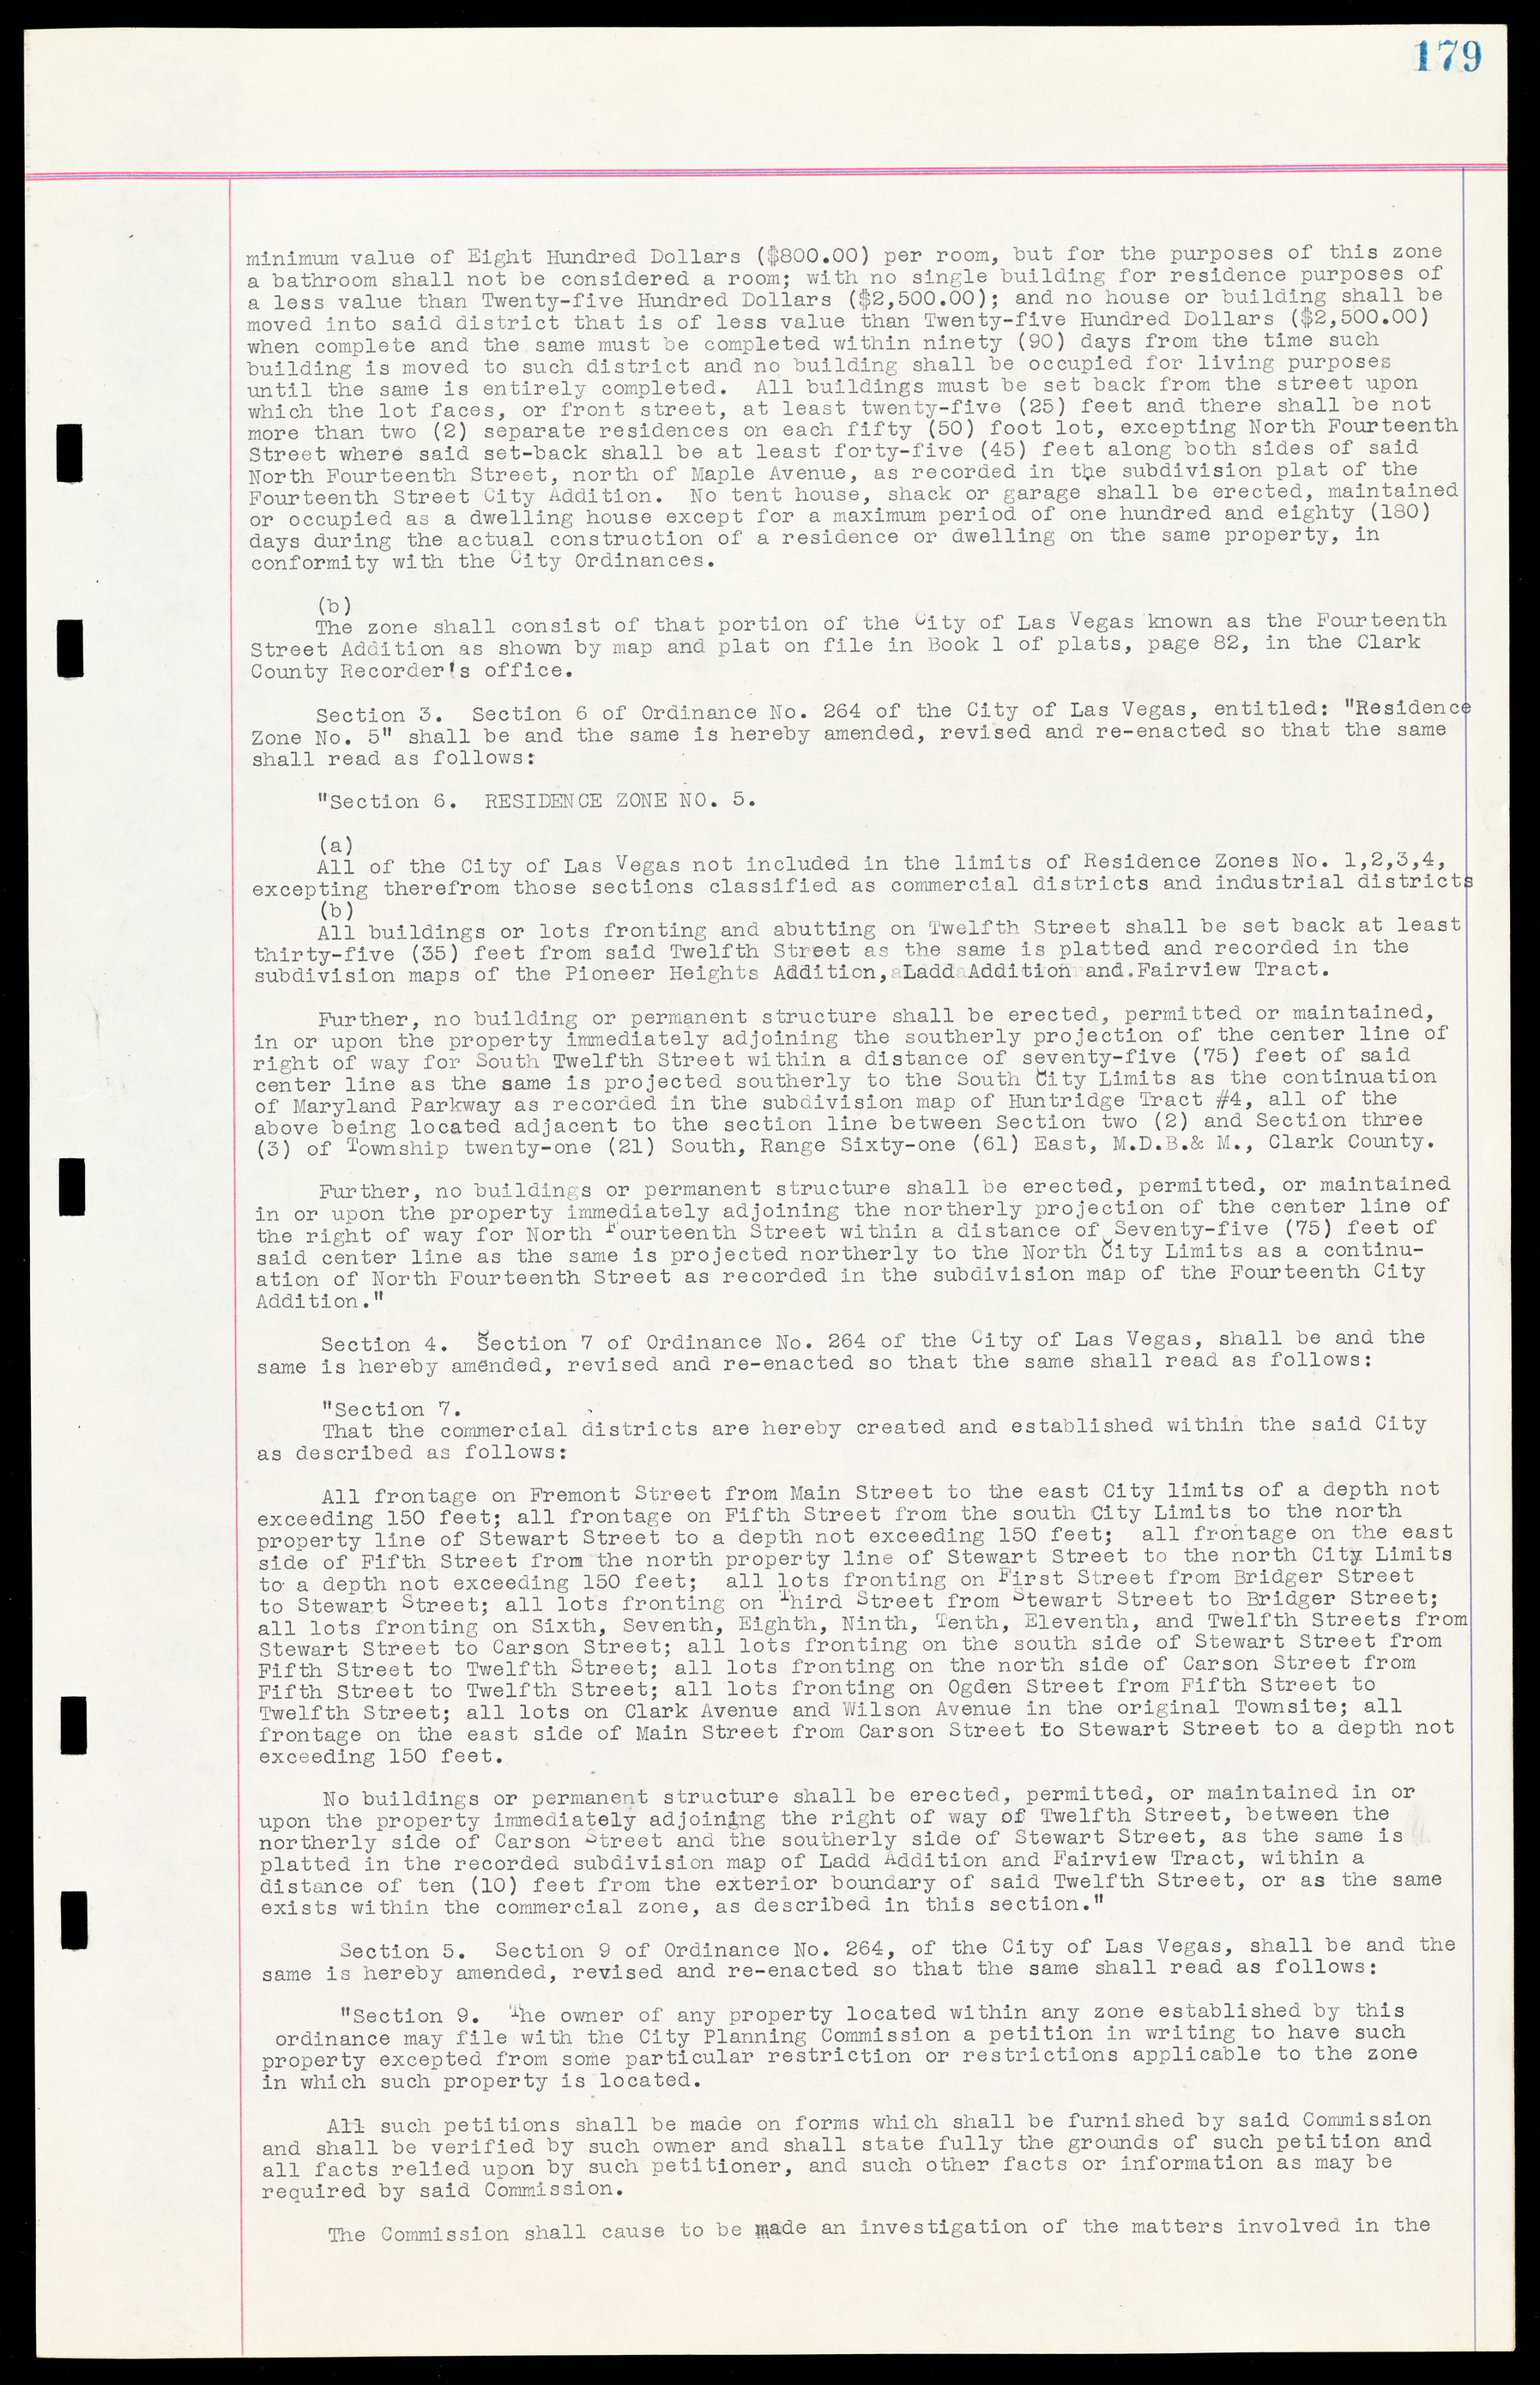 Las Vegas City Ordinances, March 31, 1933 to October 25, 1950, lvc000014-199